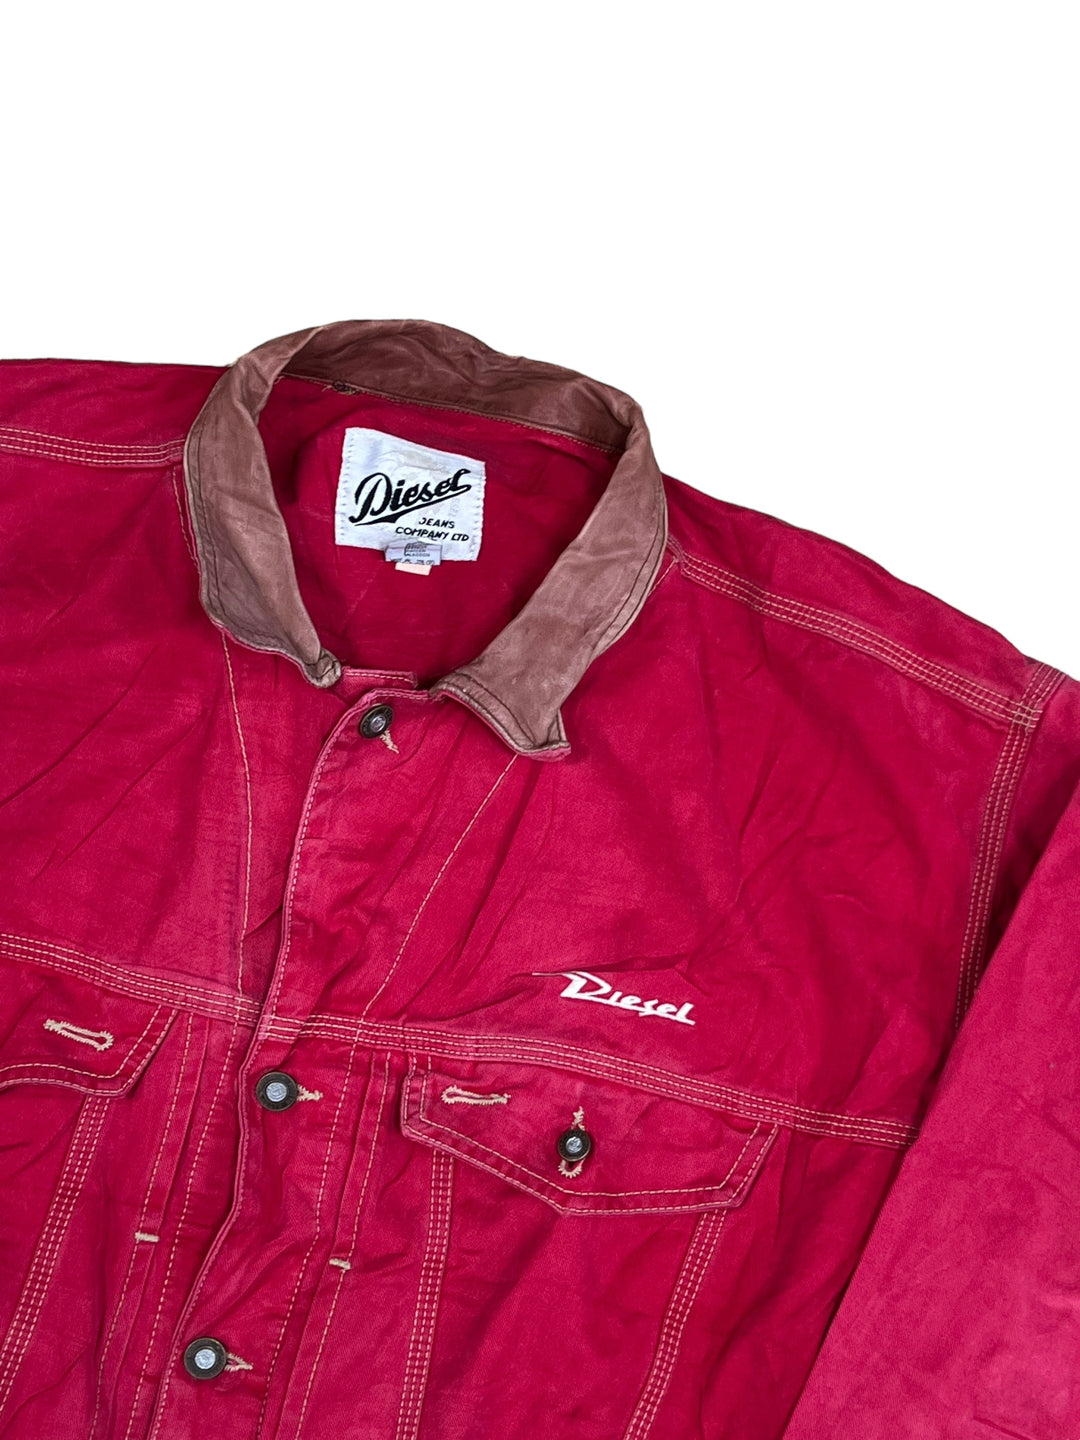 Diesel 90’s faded red denim jacket men’s large